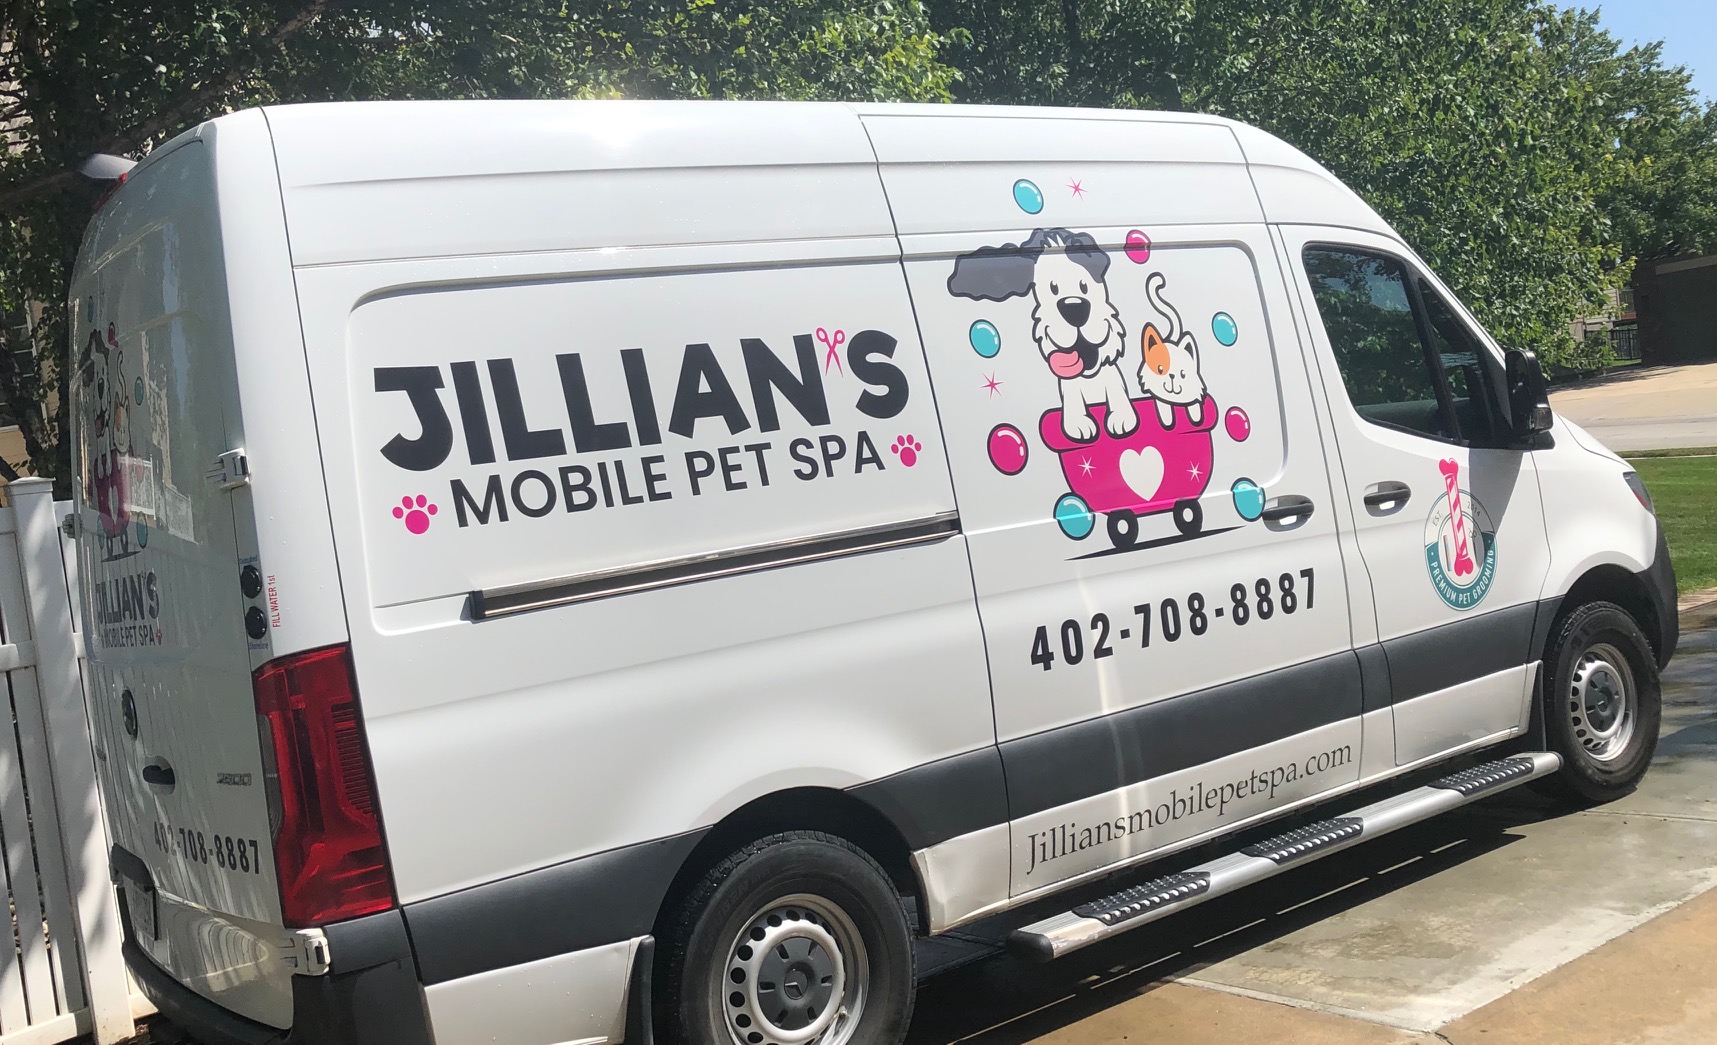 Jillian's Mobile Pet Spa